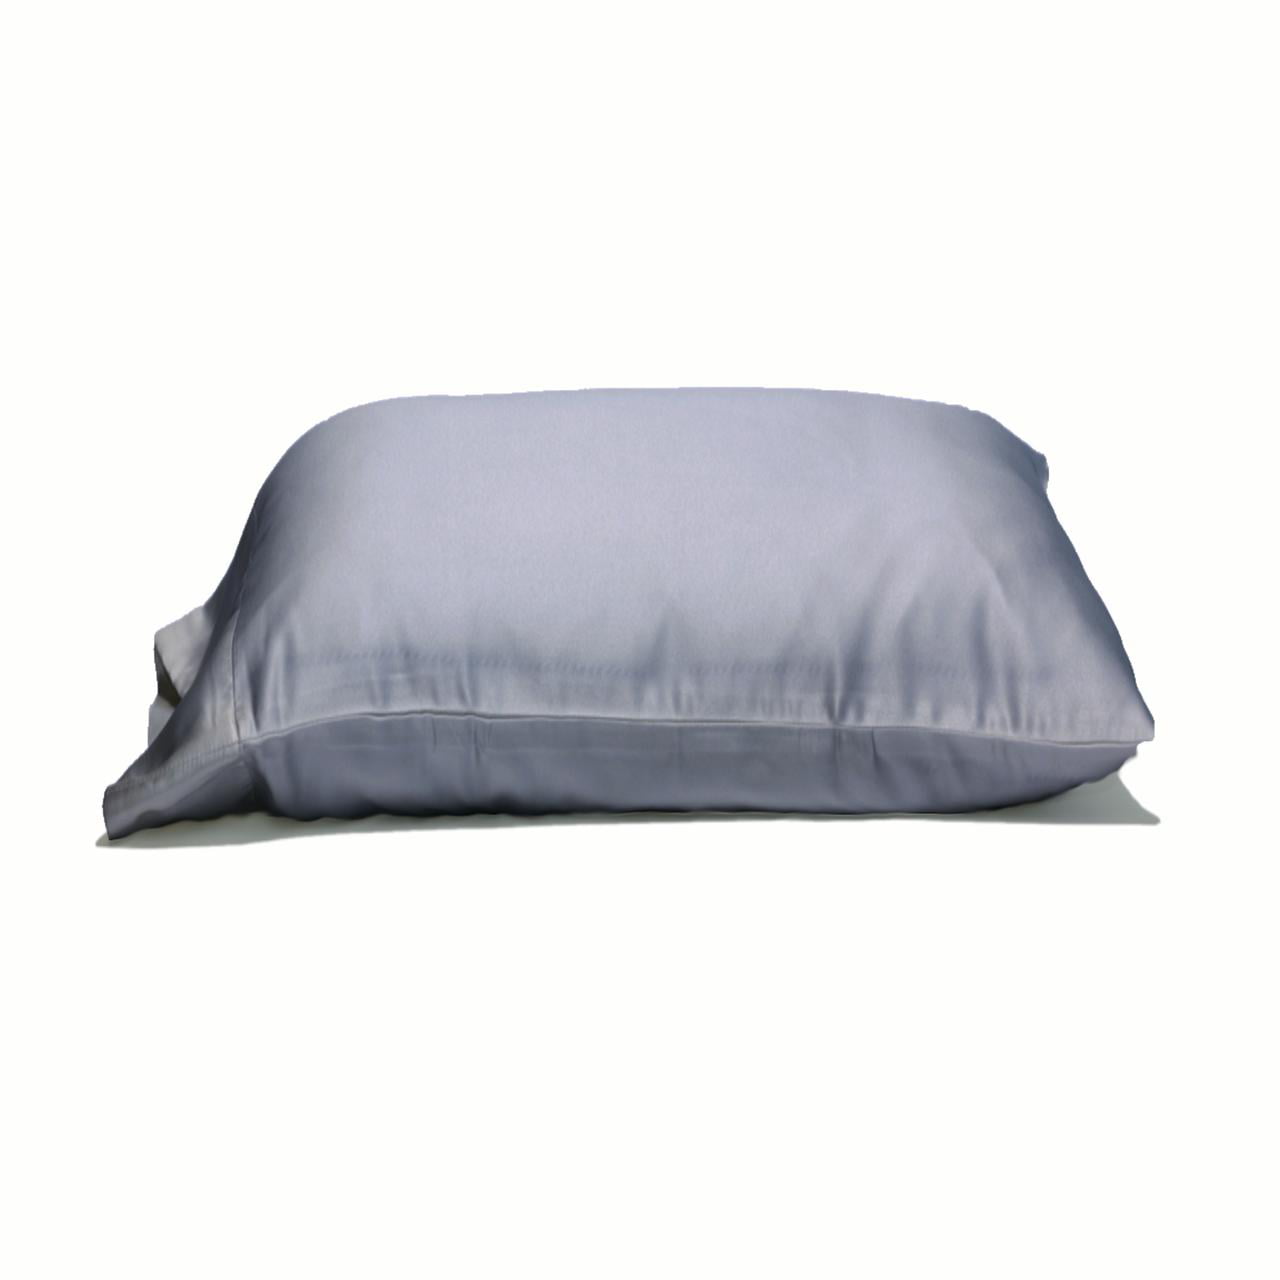 gravity sleep oversize pillow case fits 